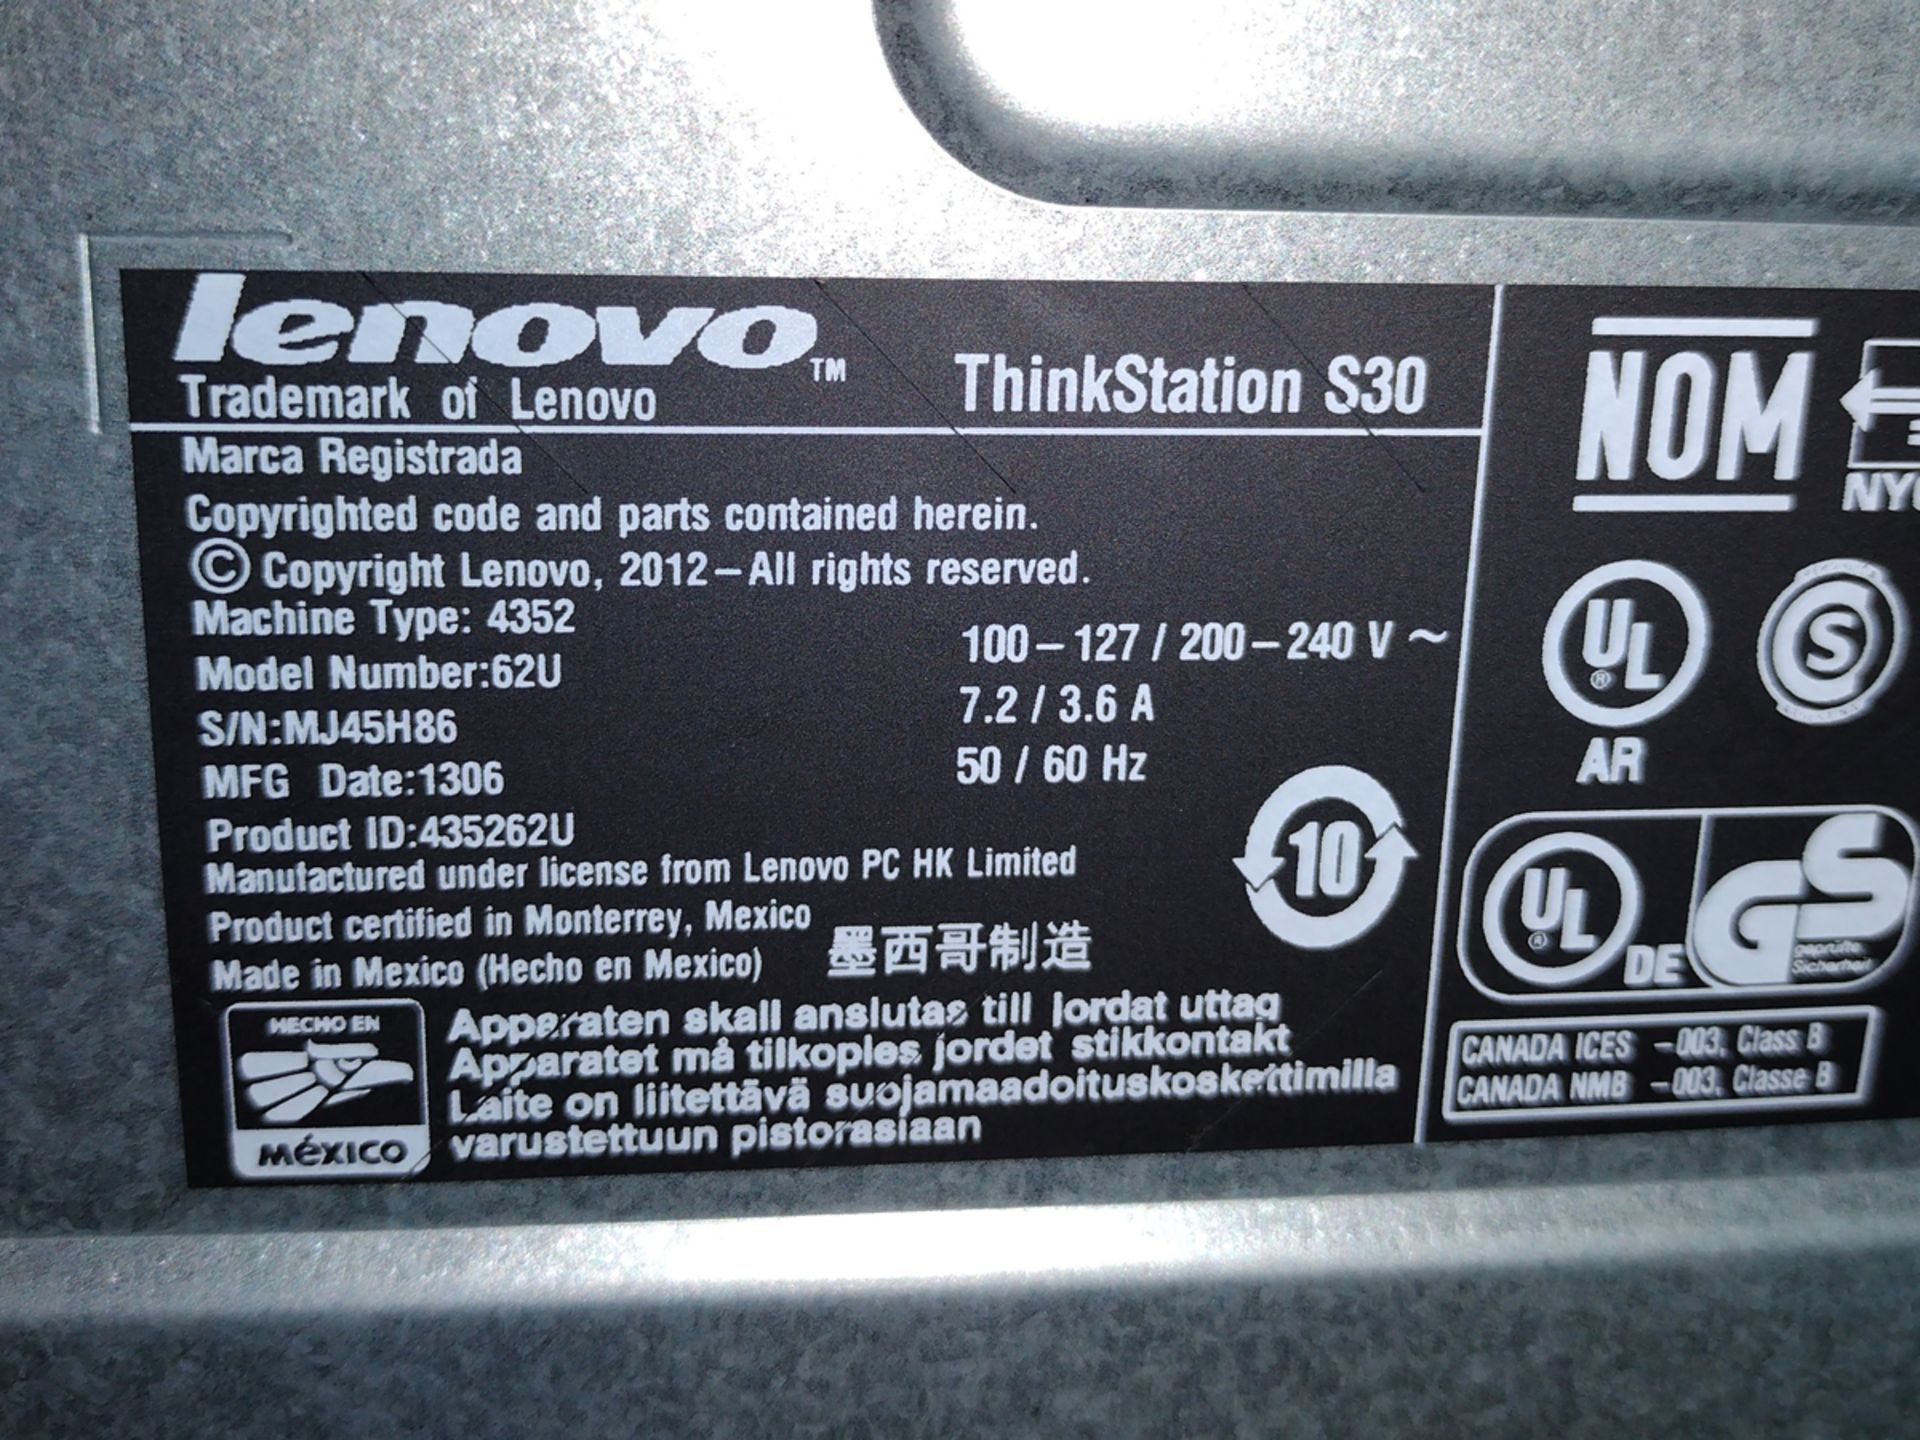 Lenovo S30 ThinkStation Xeon PC w/ Monitor and Keyboard - Image 2 of 2